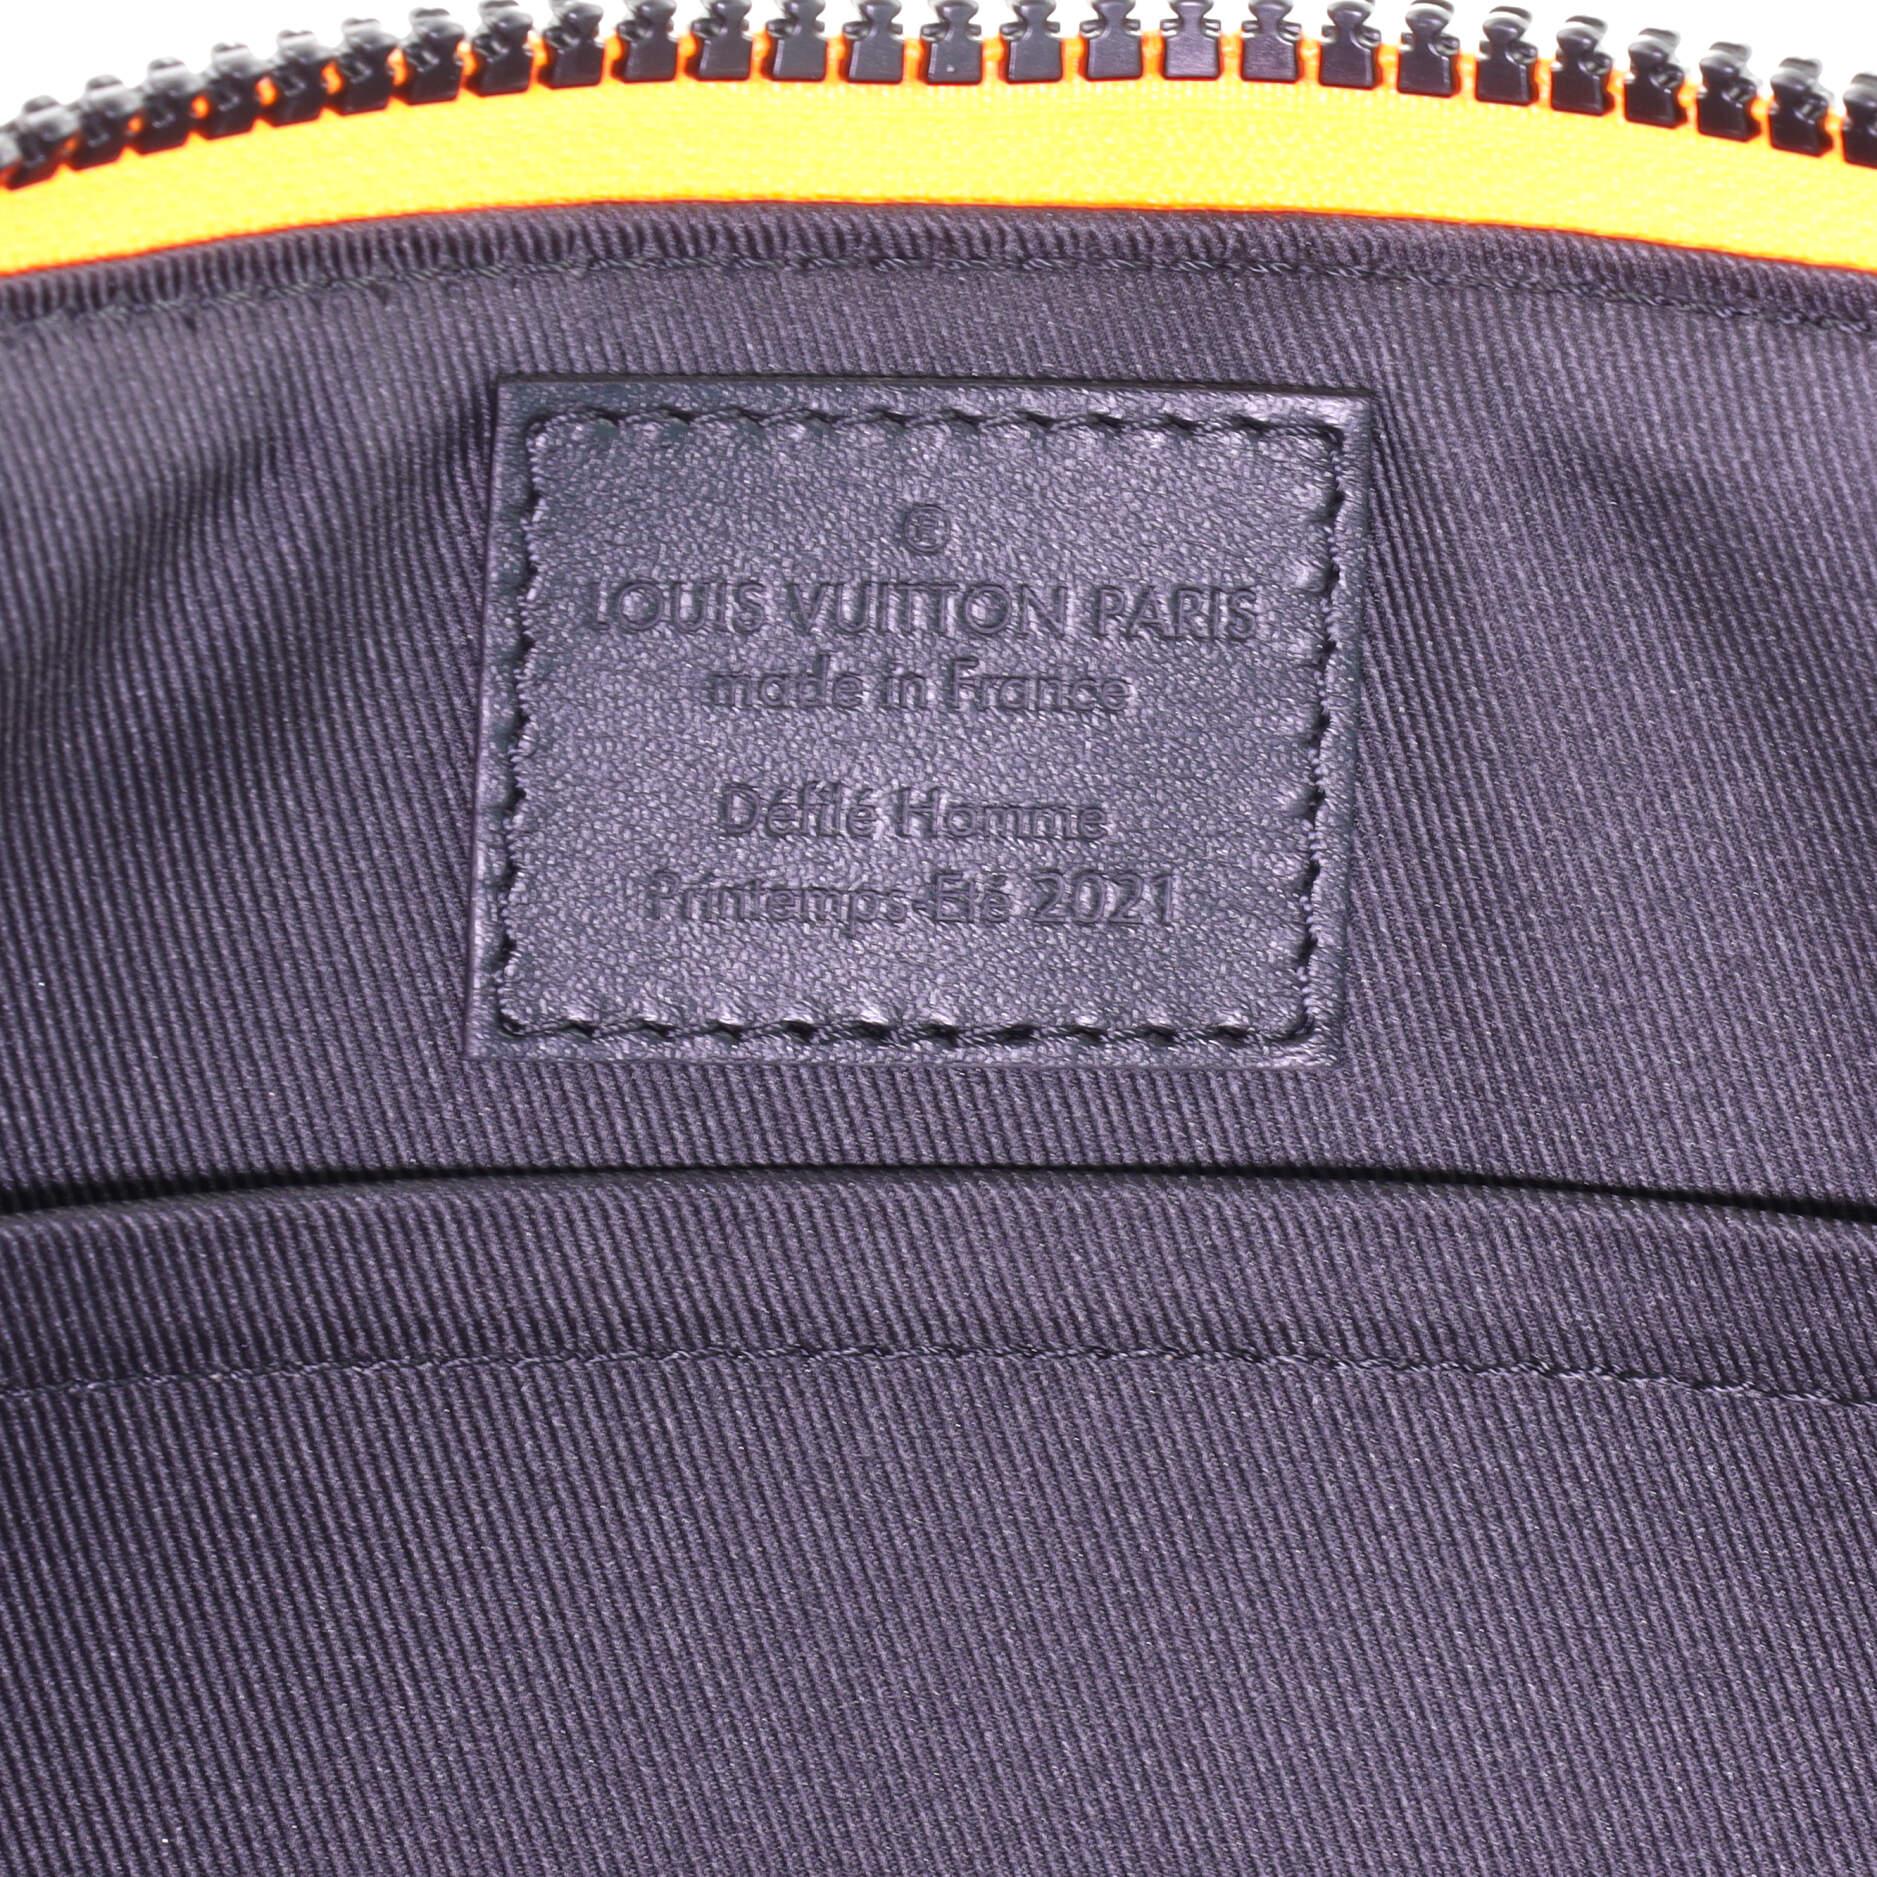 Black Louis Vuitton City Keepall Bag Monogram Canvas with LV Friend Patch